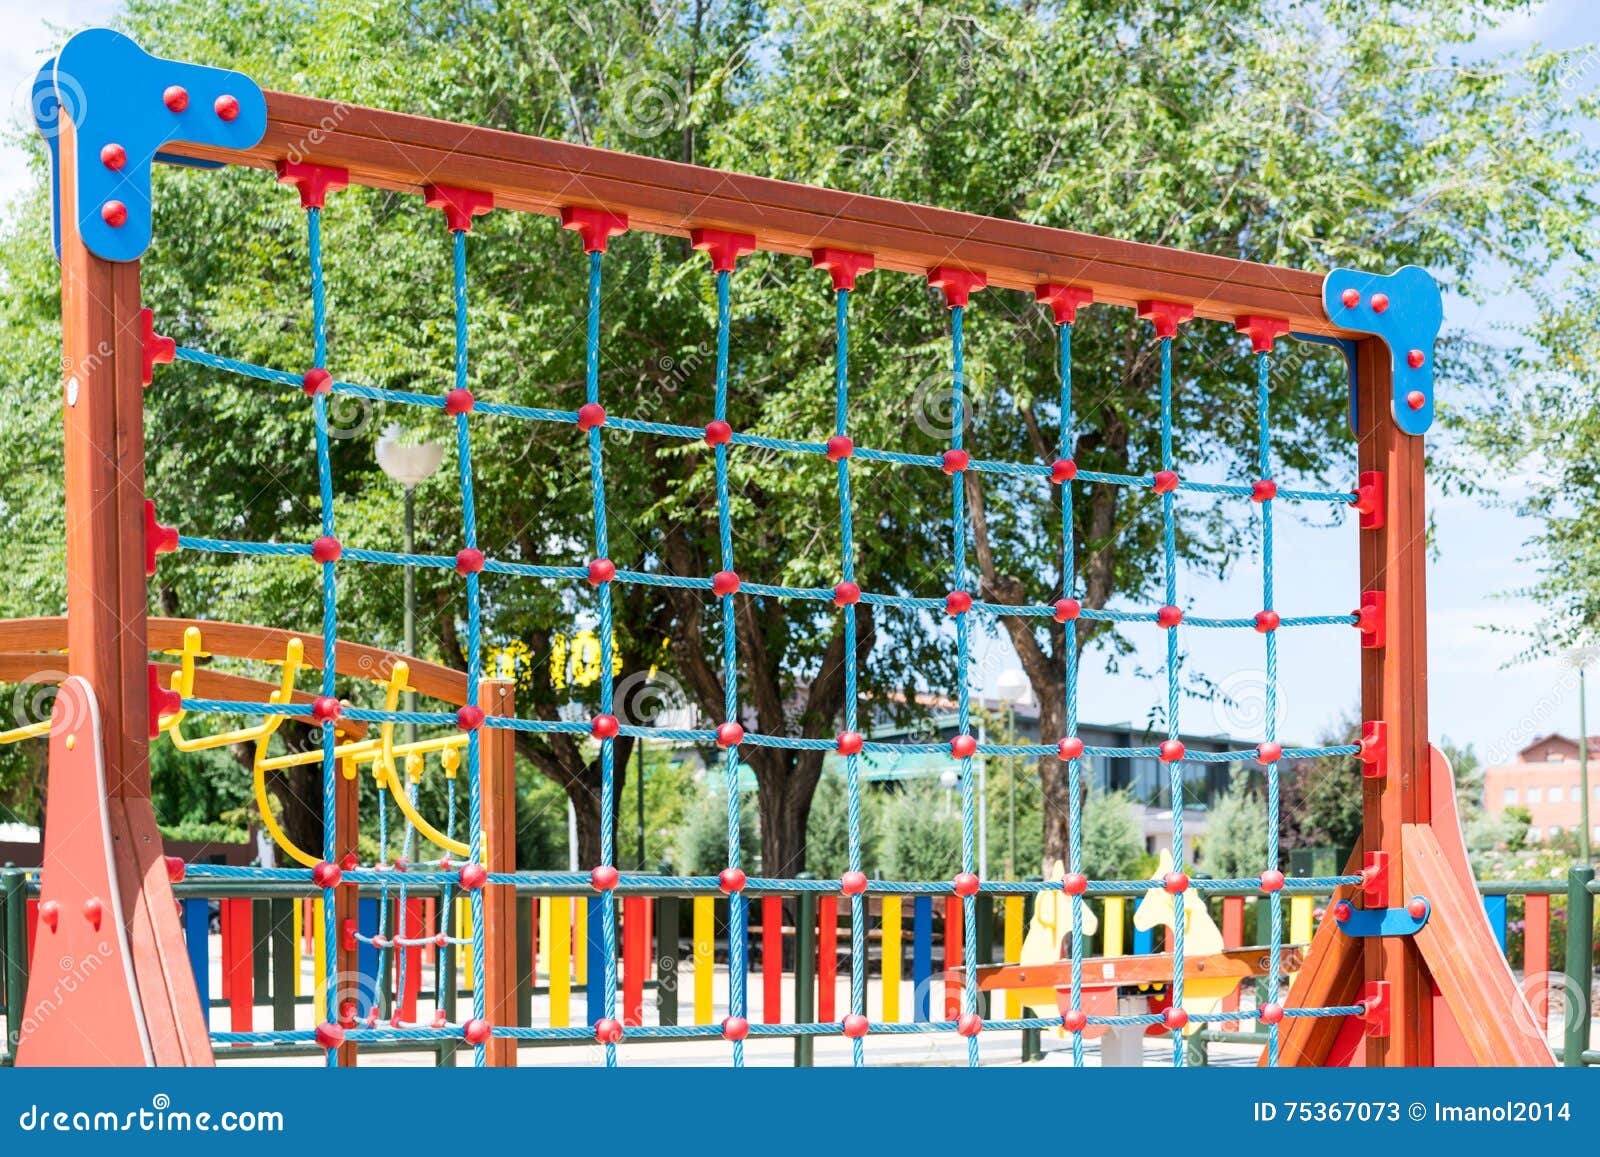 Climbing Wall Made of Ropes at Playground Stock Image - Image of